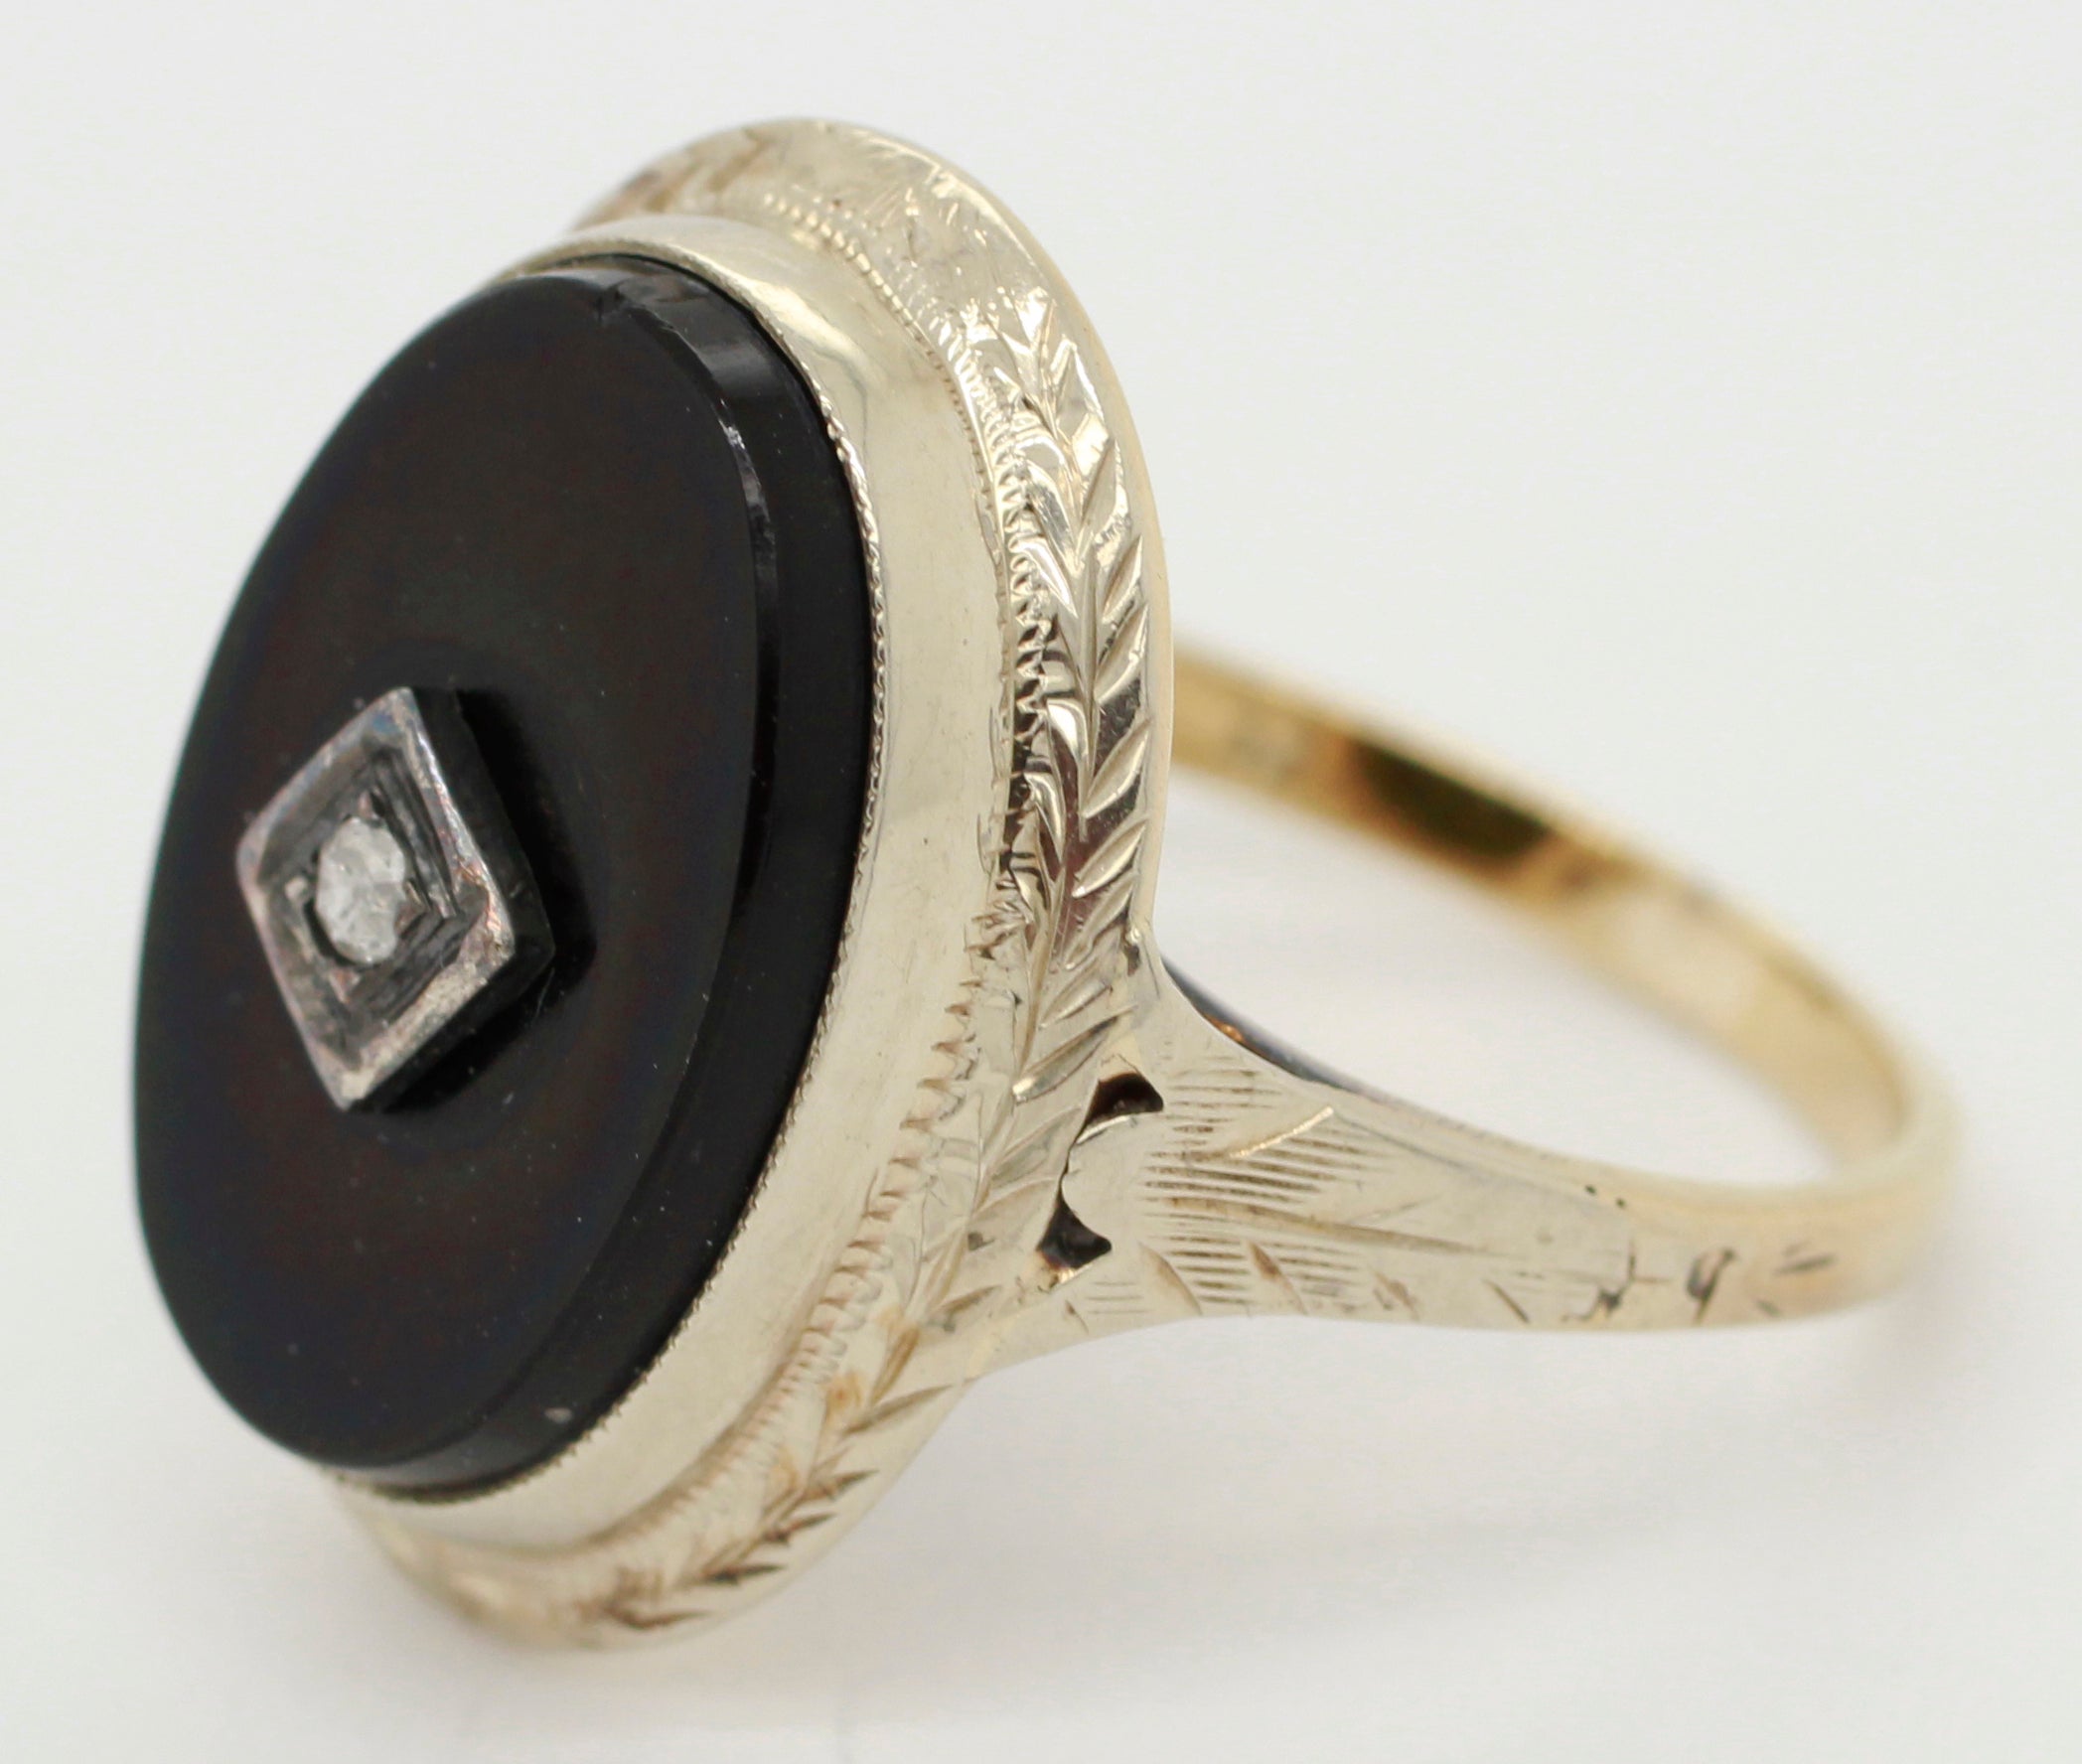 Antique Art Deco 14k White Gold Onyx and Diamond Ring